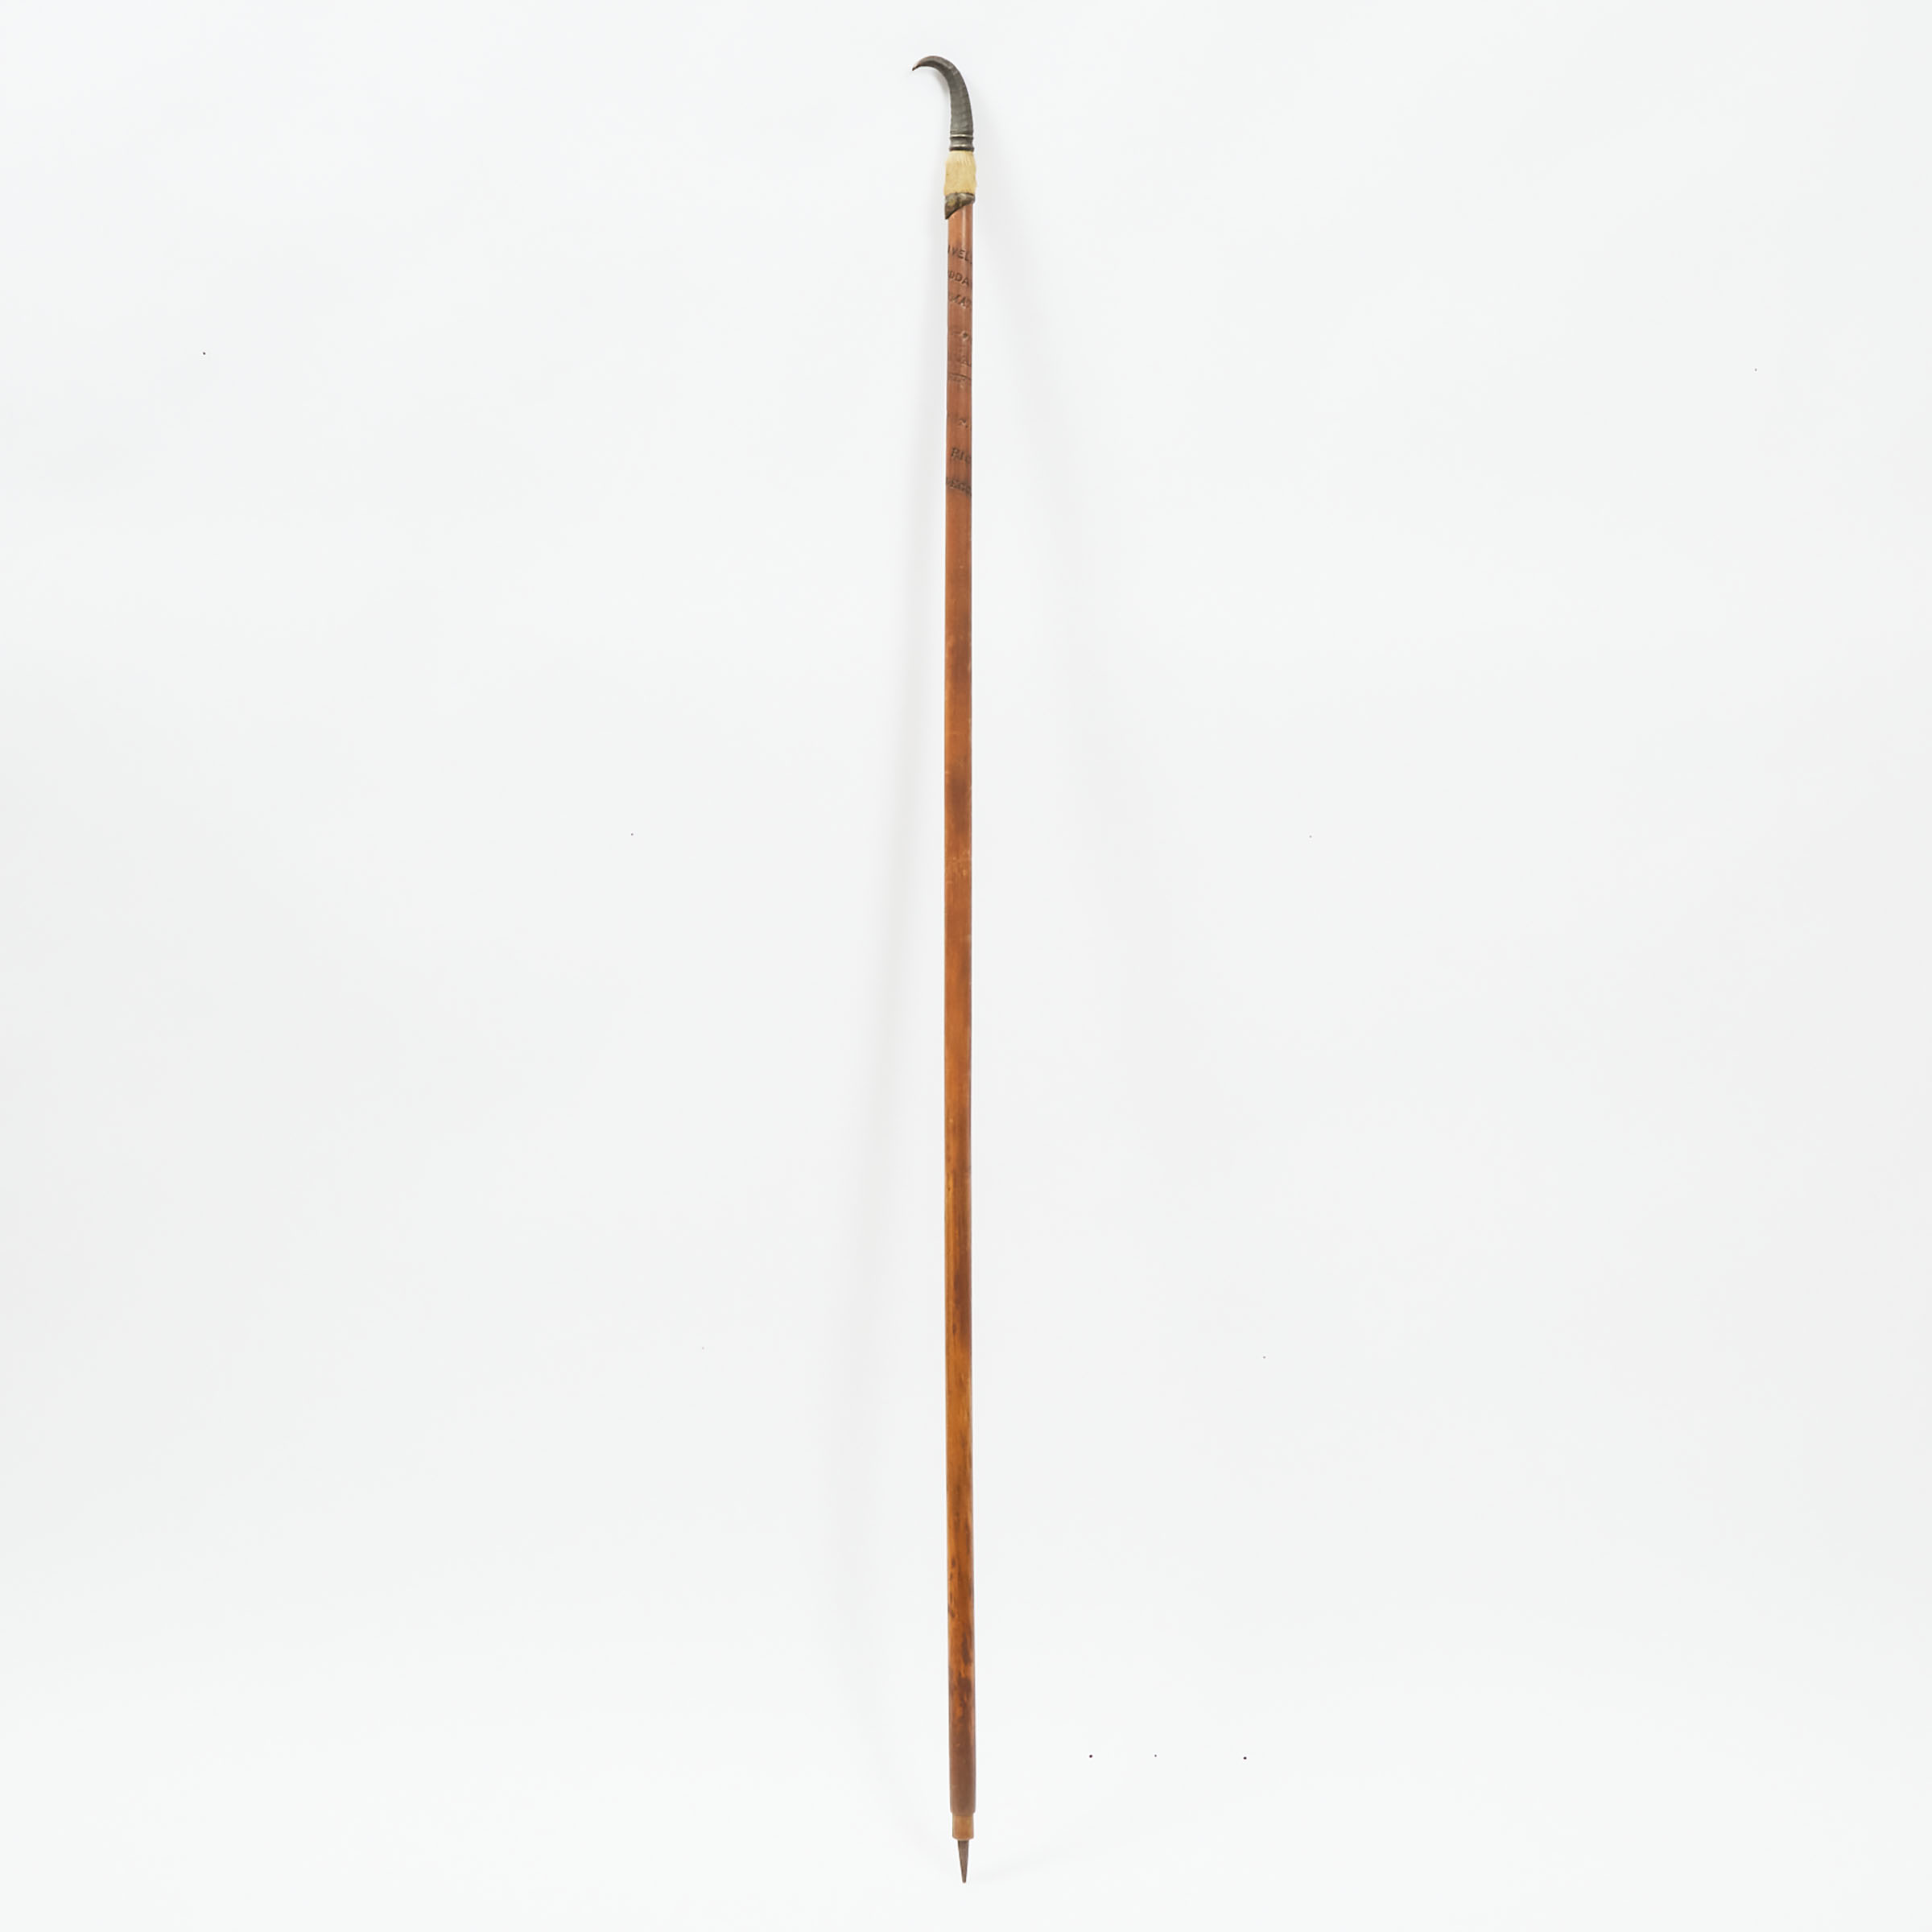 Swiss Alpine Hiking Stick, early 20th century